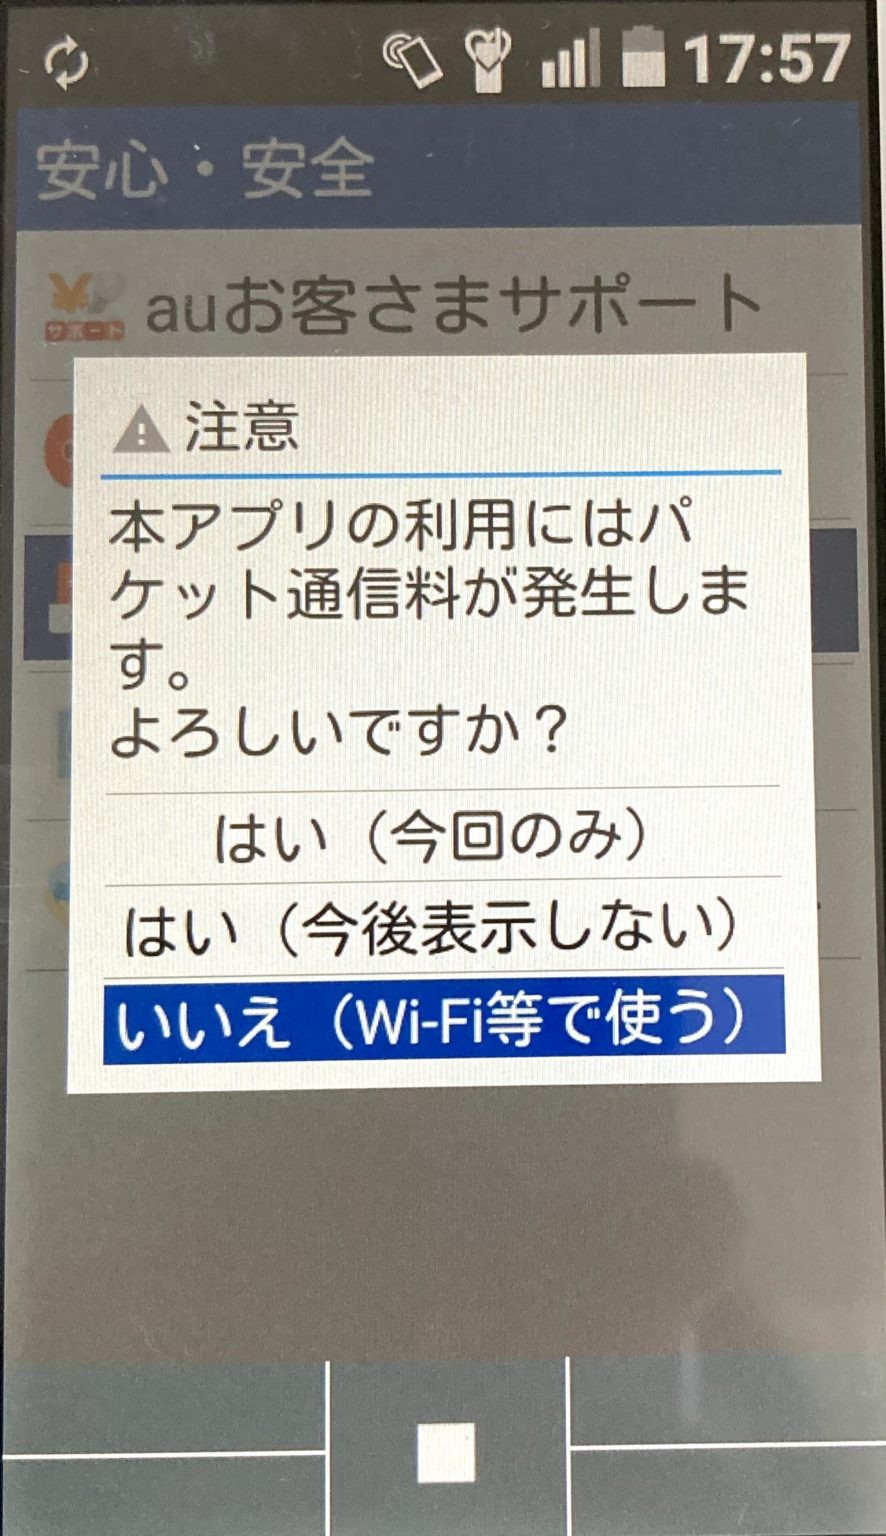 My Flip Phone Phone Book Transfer to iPhone/ガラケーから電話帳データ移行